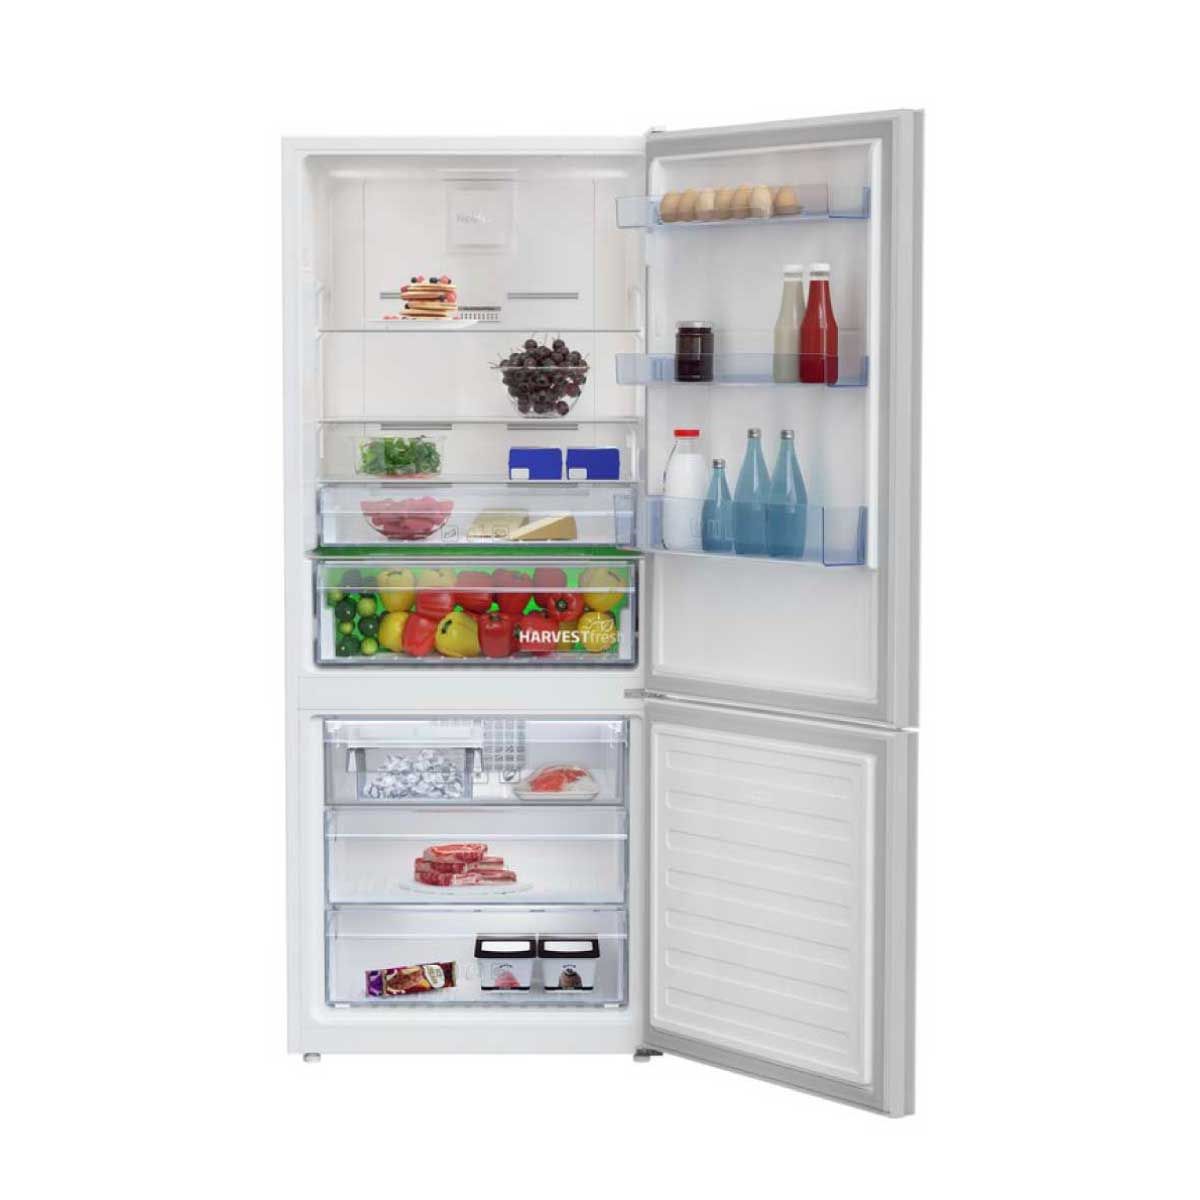 BEKO ตู้เย็น 2 ประตู14Q Harvest Fresh สีขาว รุ่น RCNT415E20VZHFGW